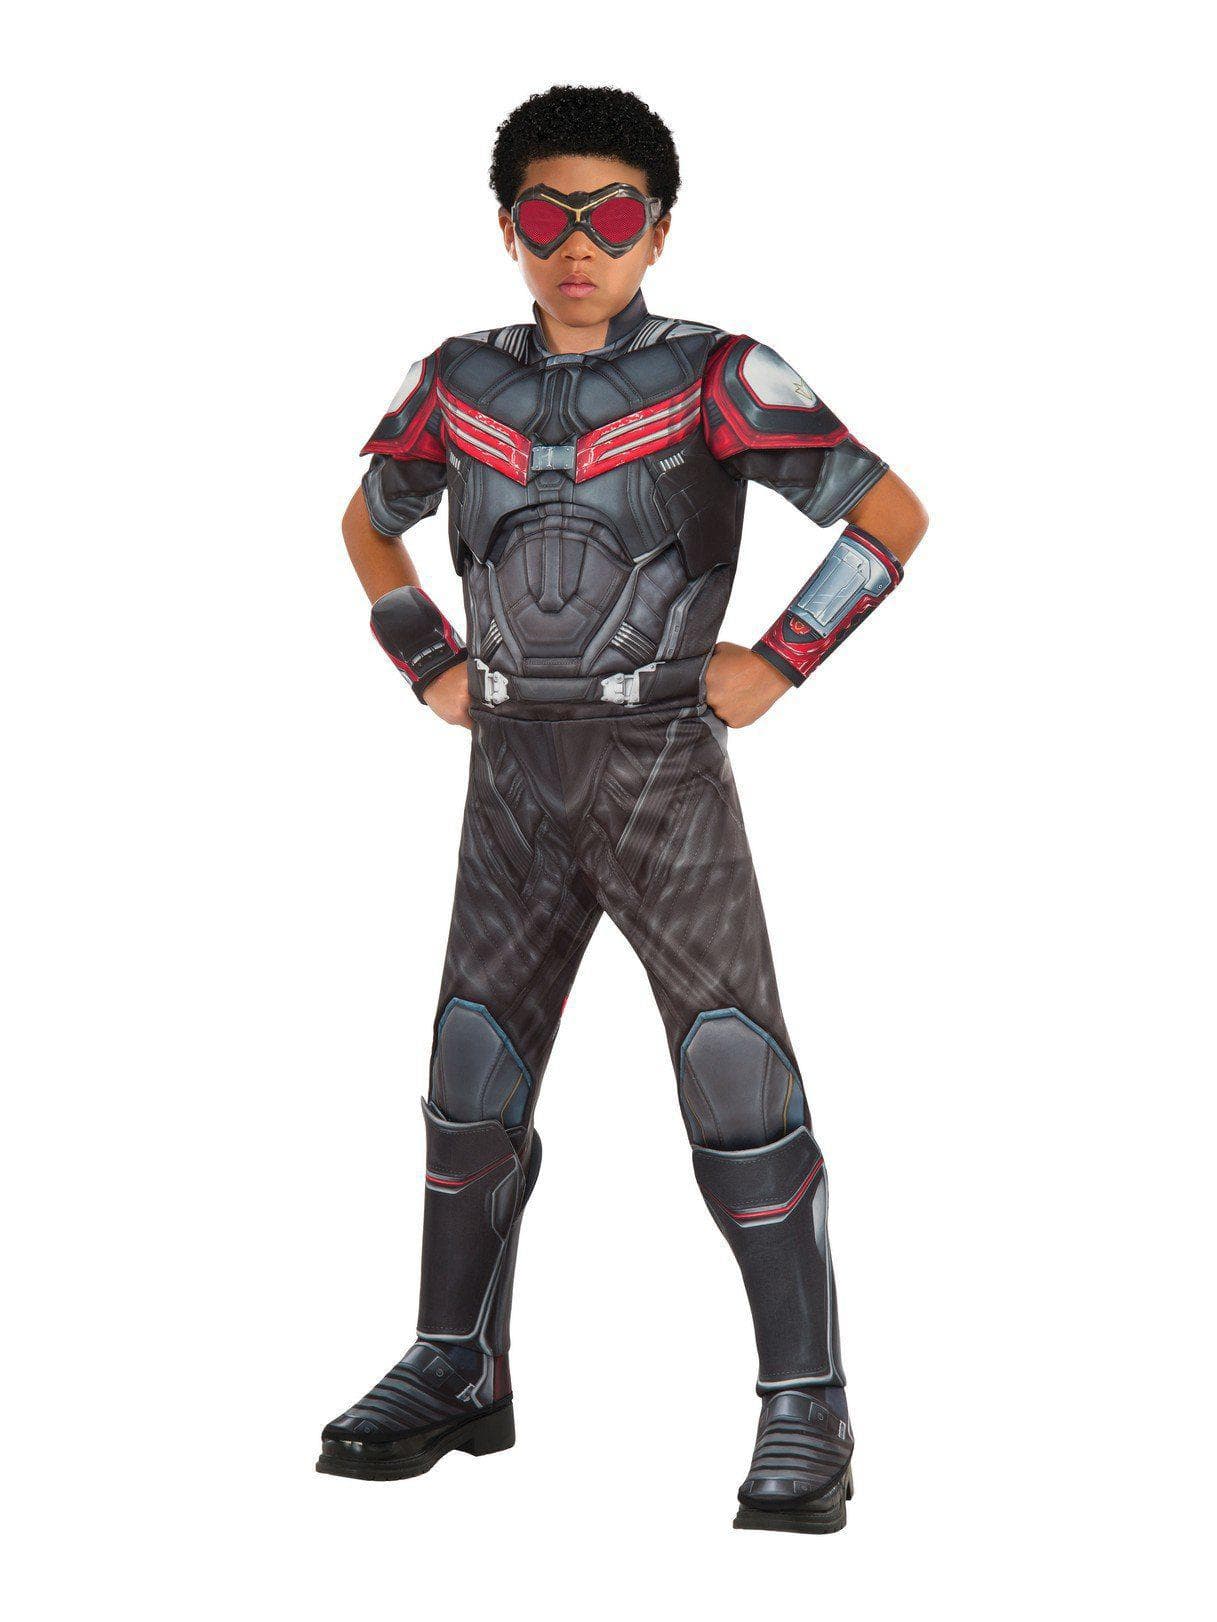 Kids Avengers Falcon Deluxe Costume - costumes.com